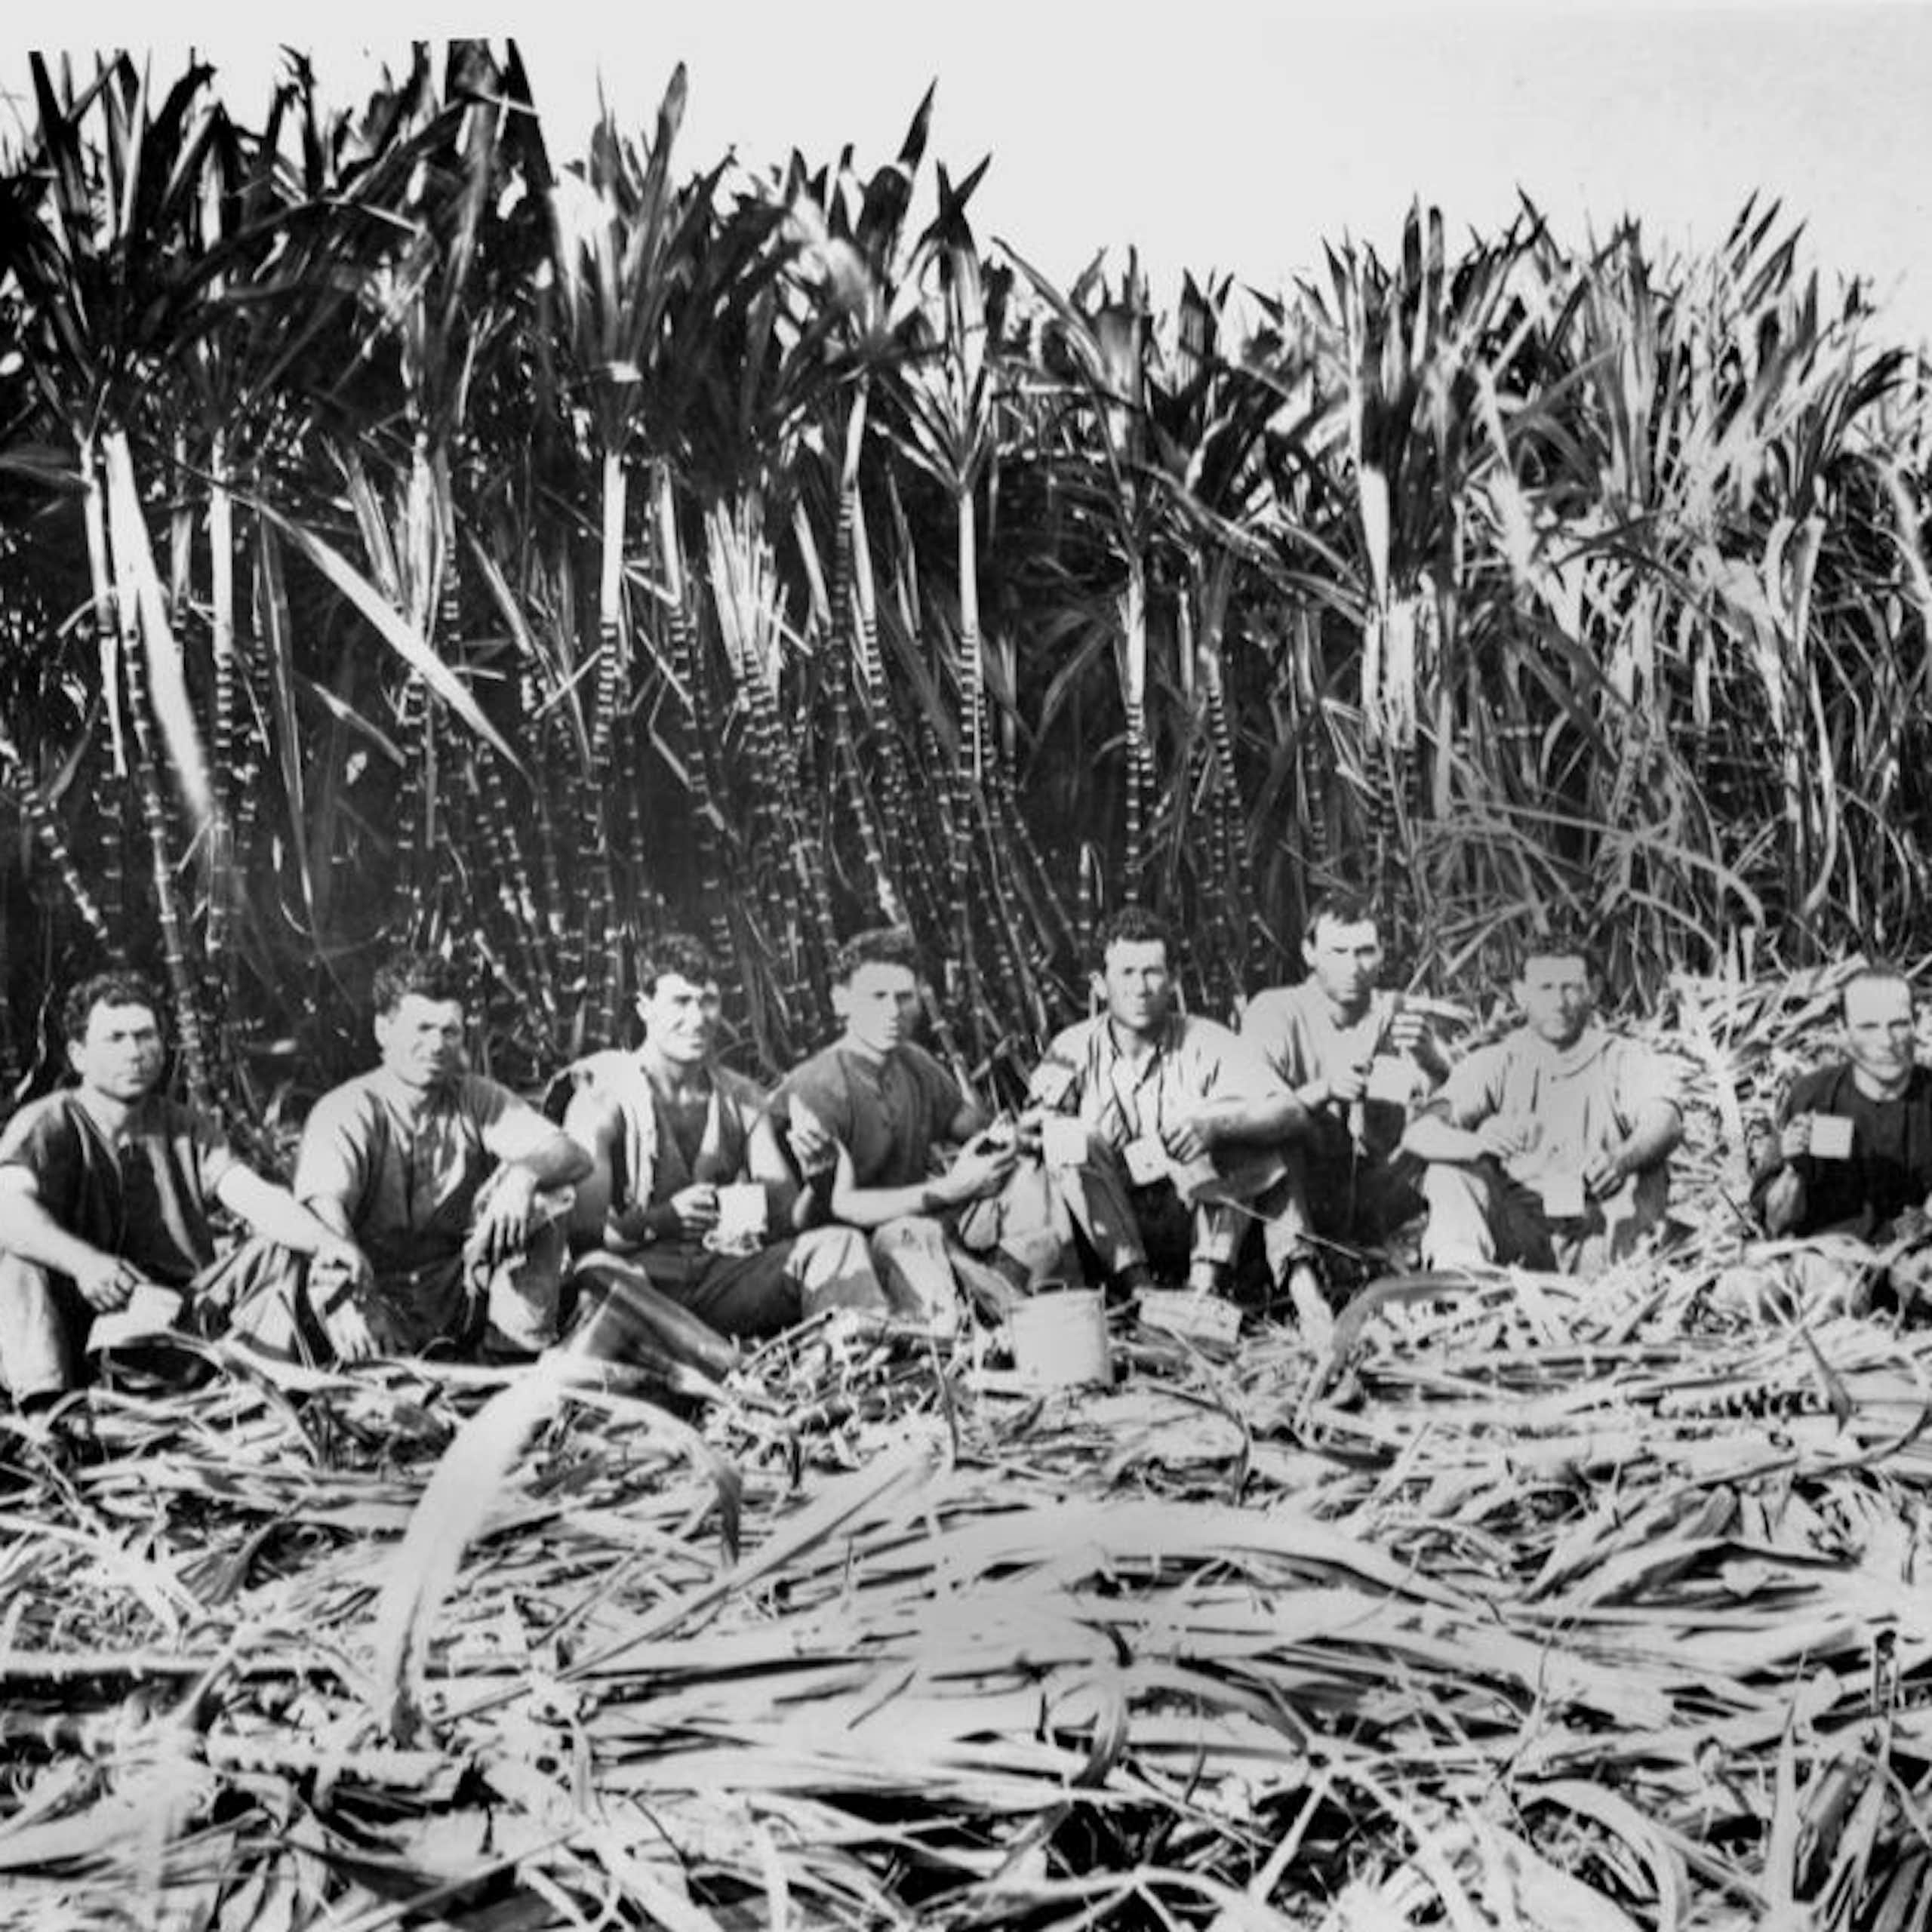 Italian cane cutters sitting in a field in Innisfail, Queensland 1923